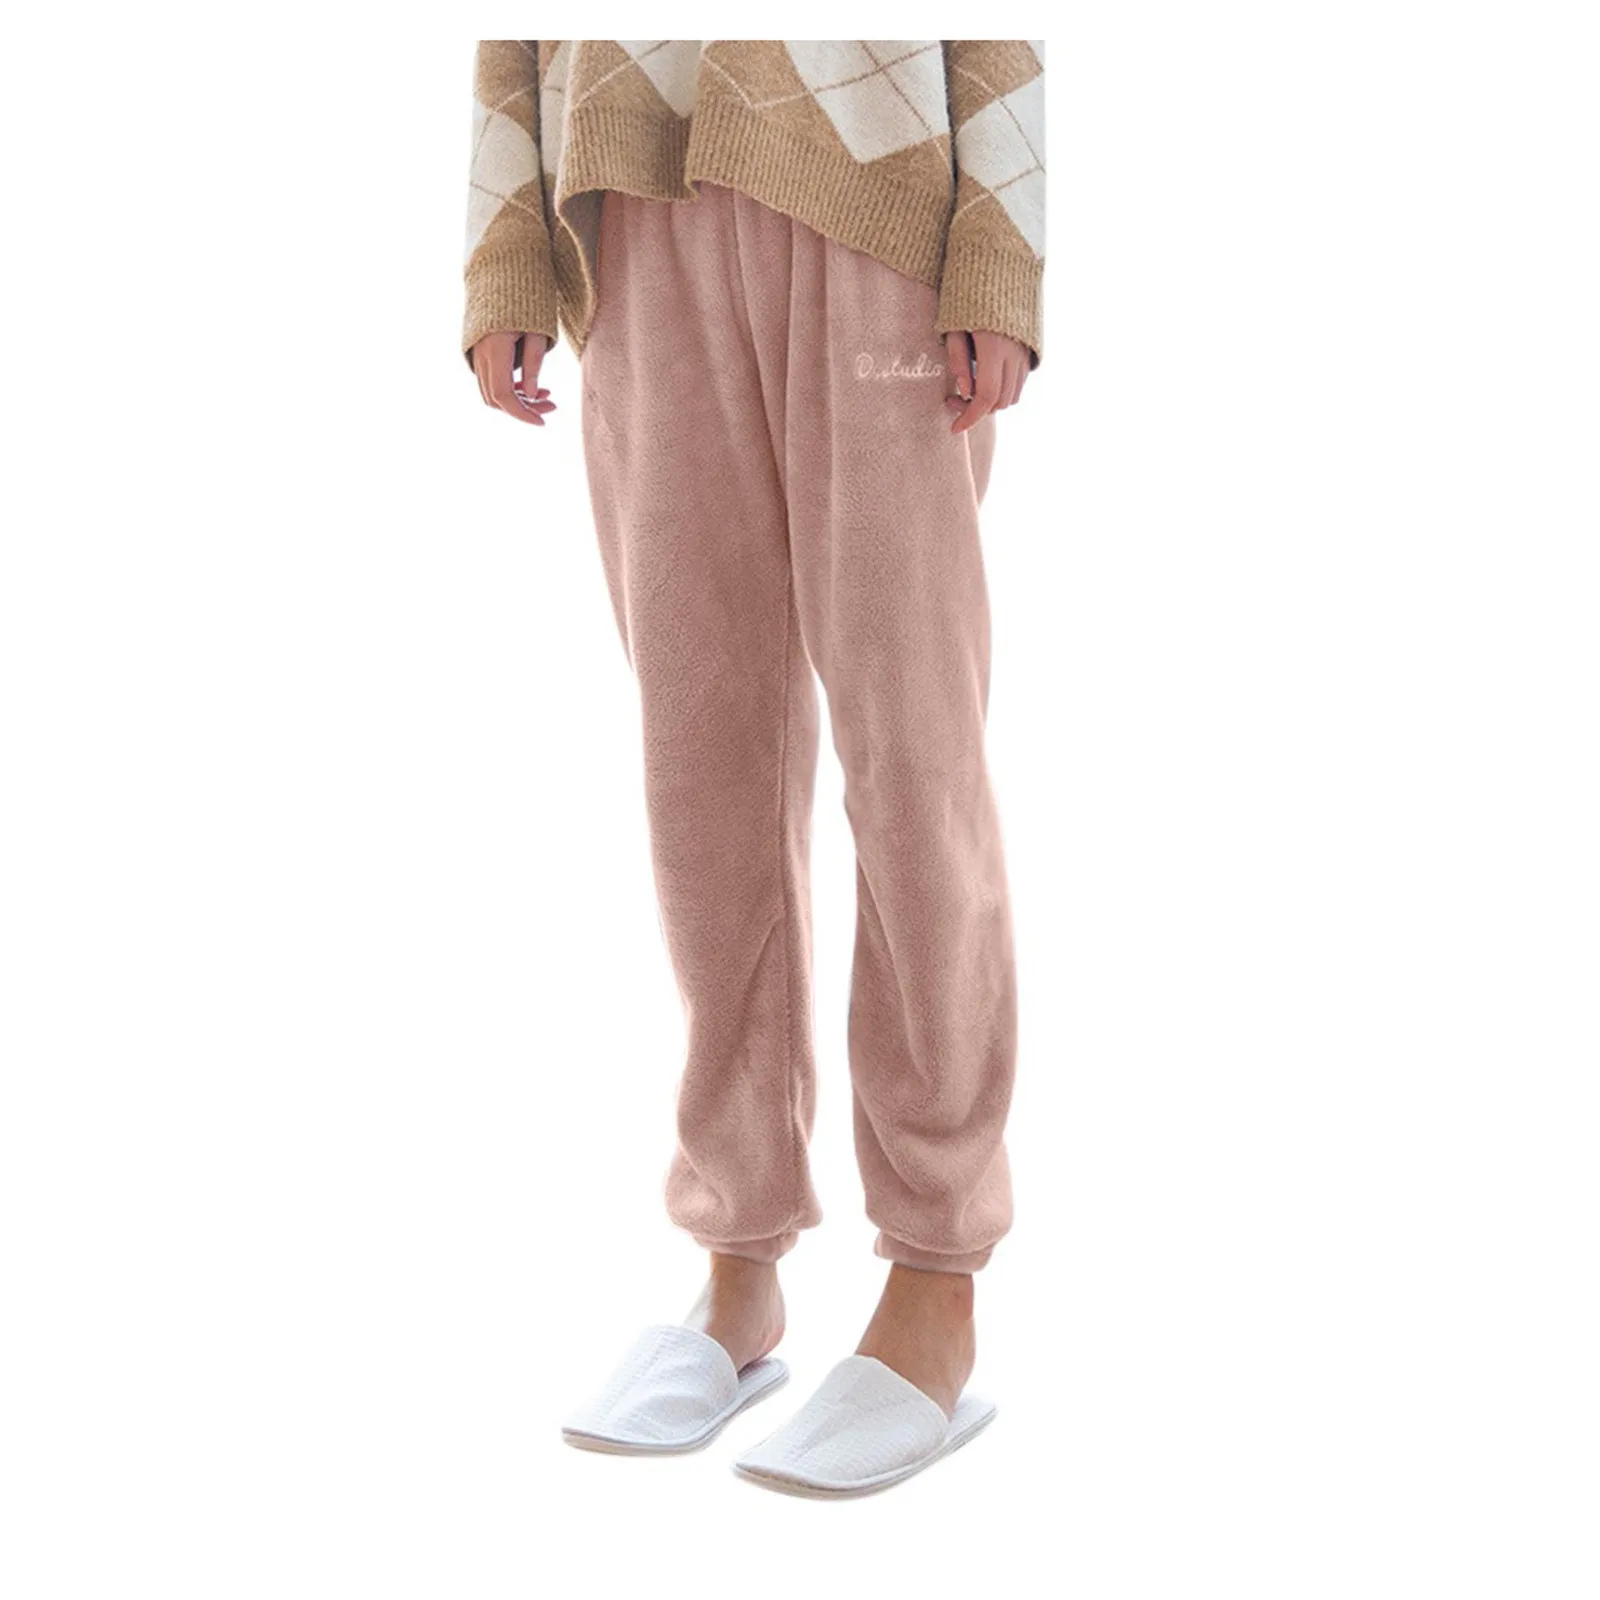 Fluffy Soft Sleep Bottoms Women Winter Full Length Pajama Pants